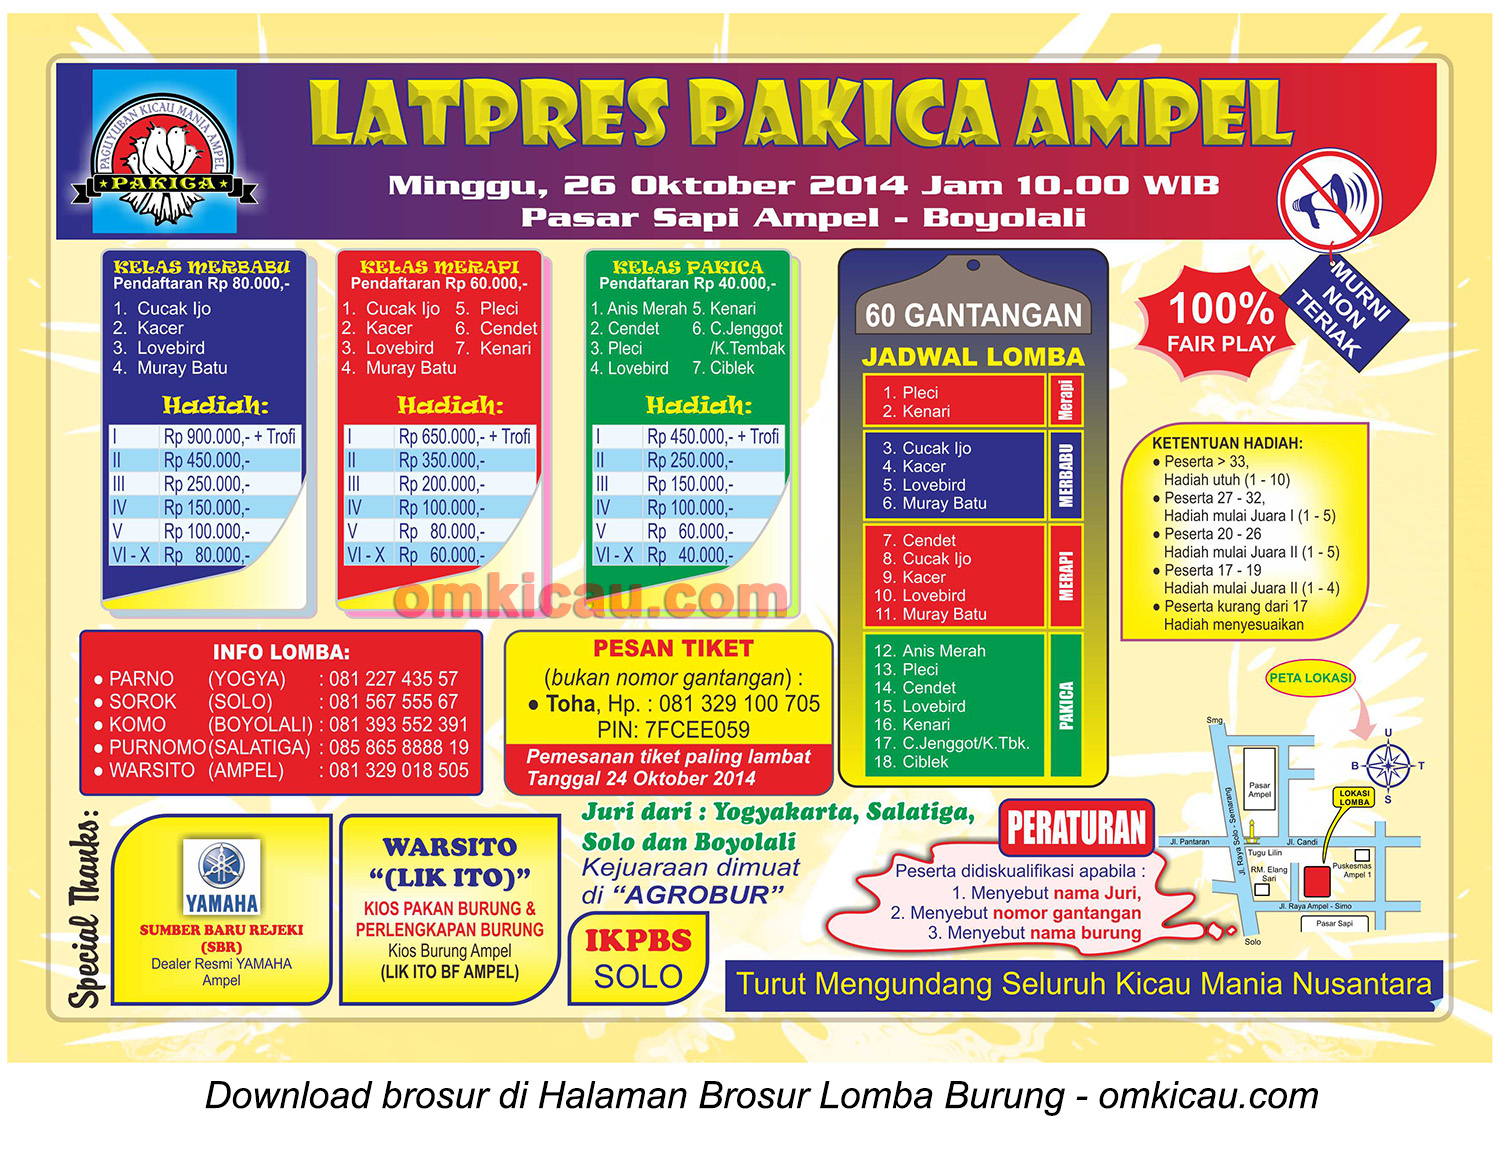 Brosur Latpres Pakica Ampel, Boyolali, 26 Oktober 2014